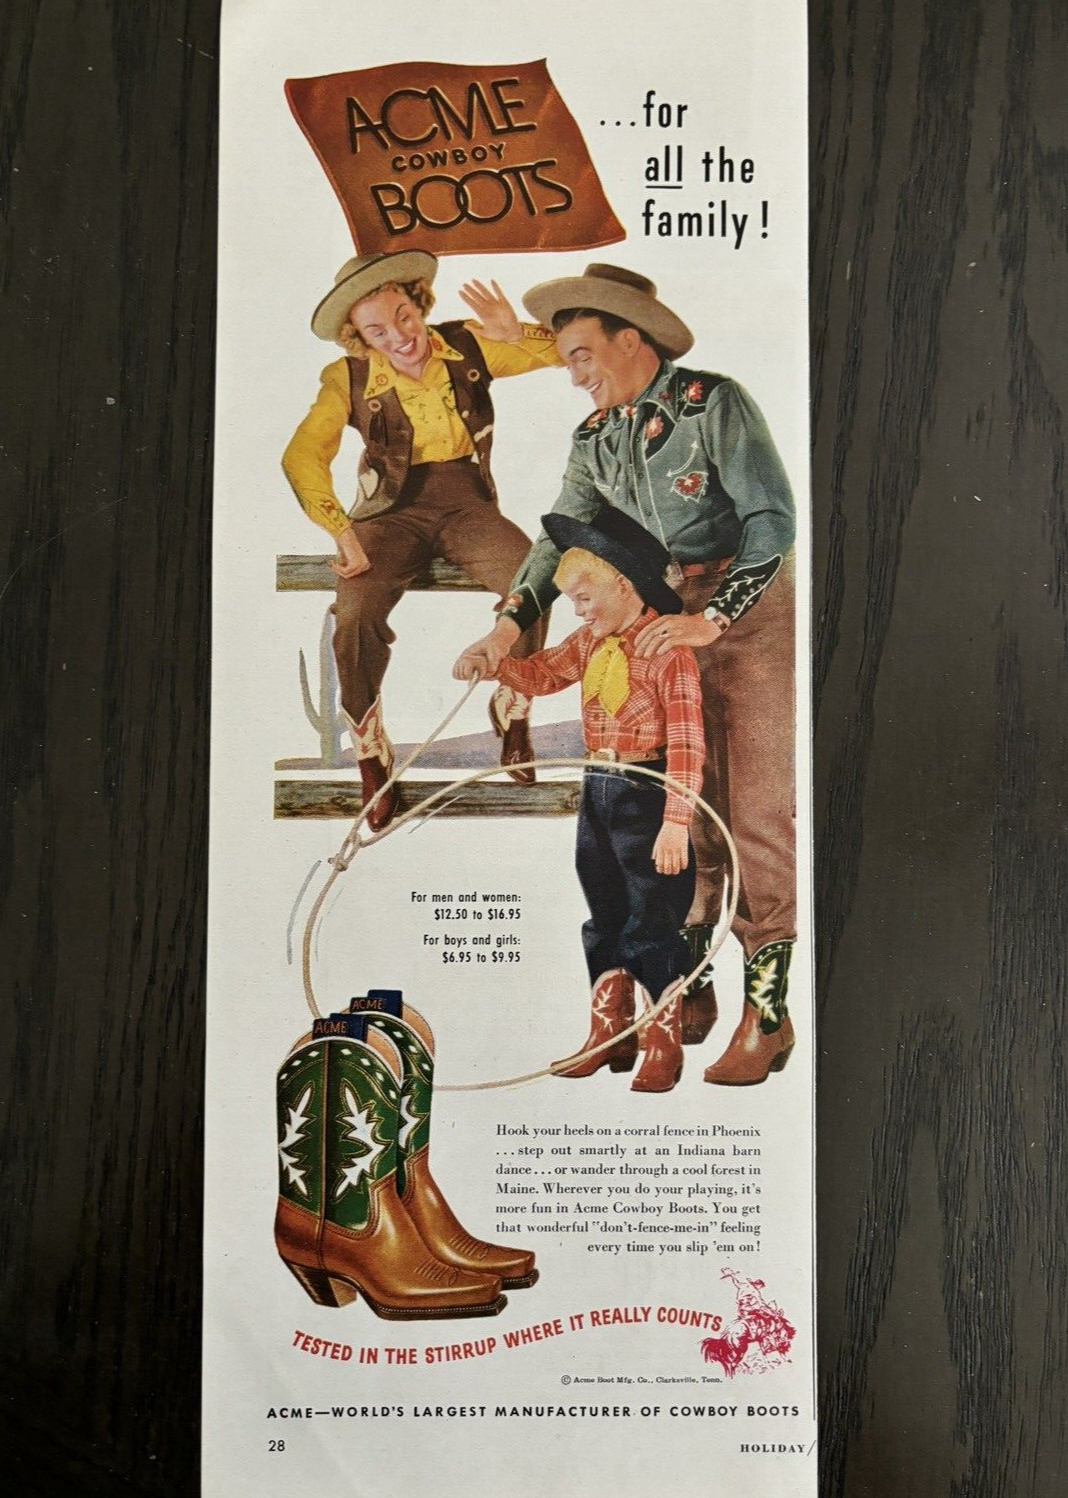 Acme Cowboy Boots Clarksville Tenn. Family Stirrup Vintage Print Ad 1948